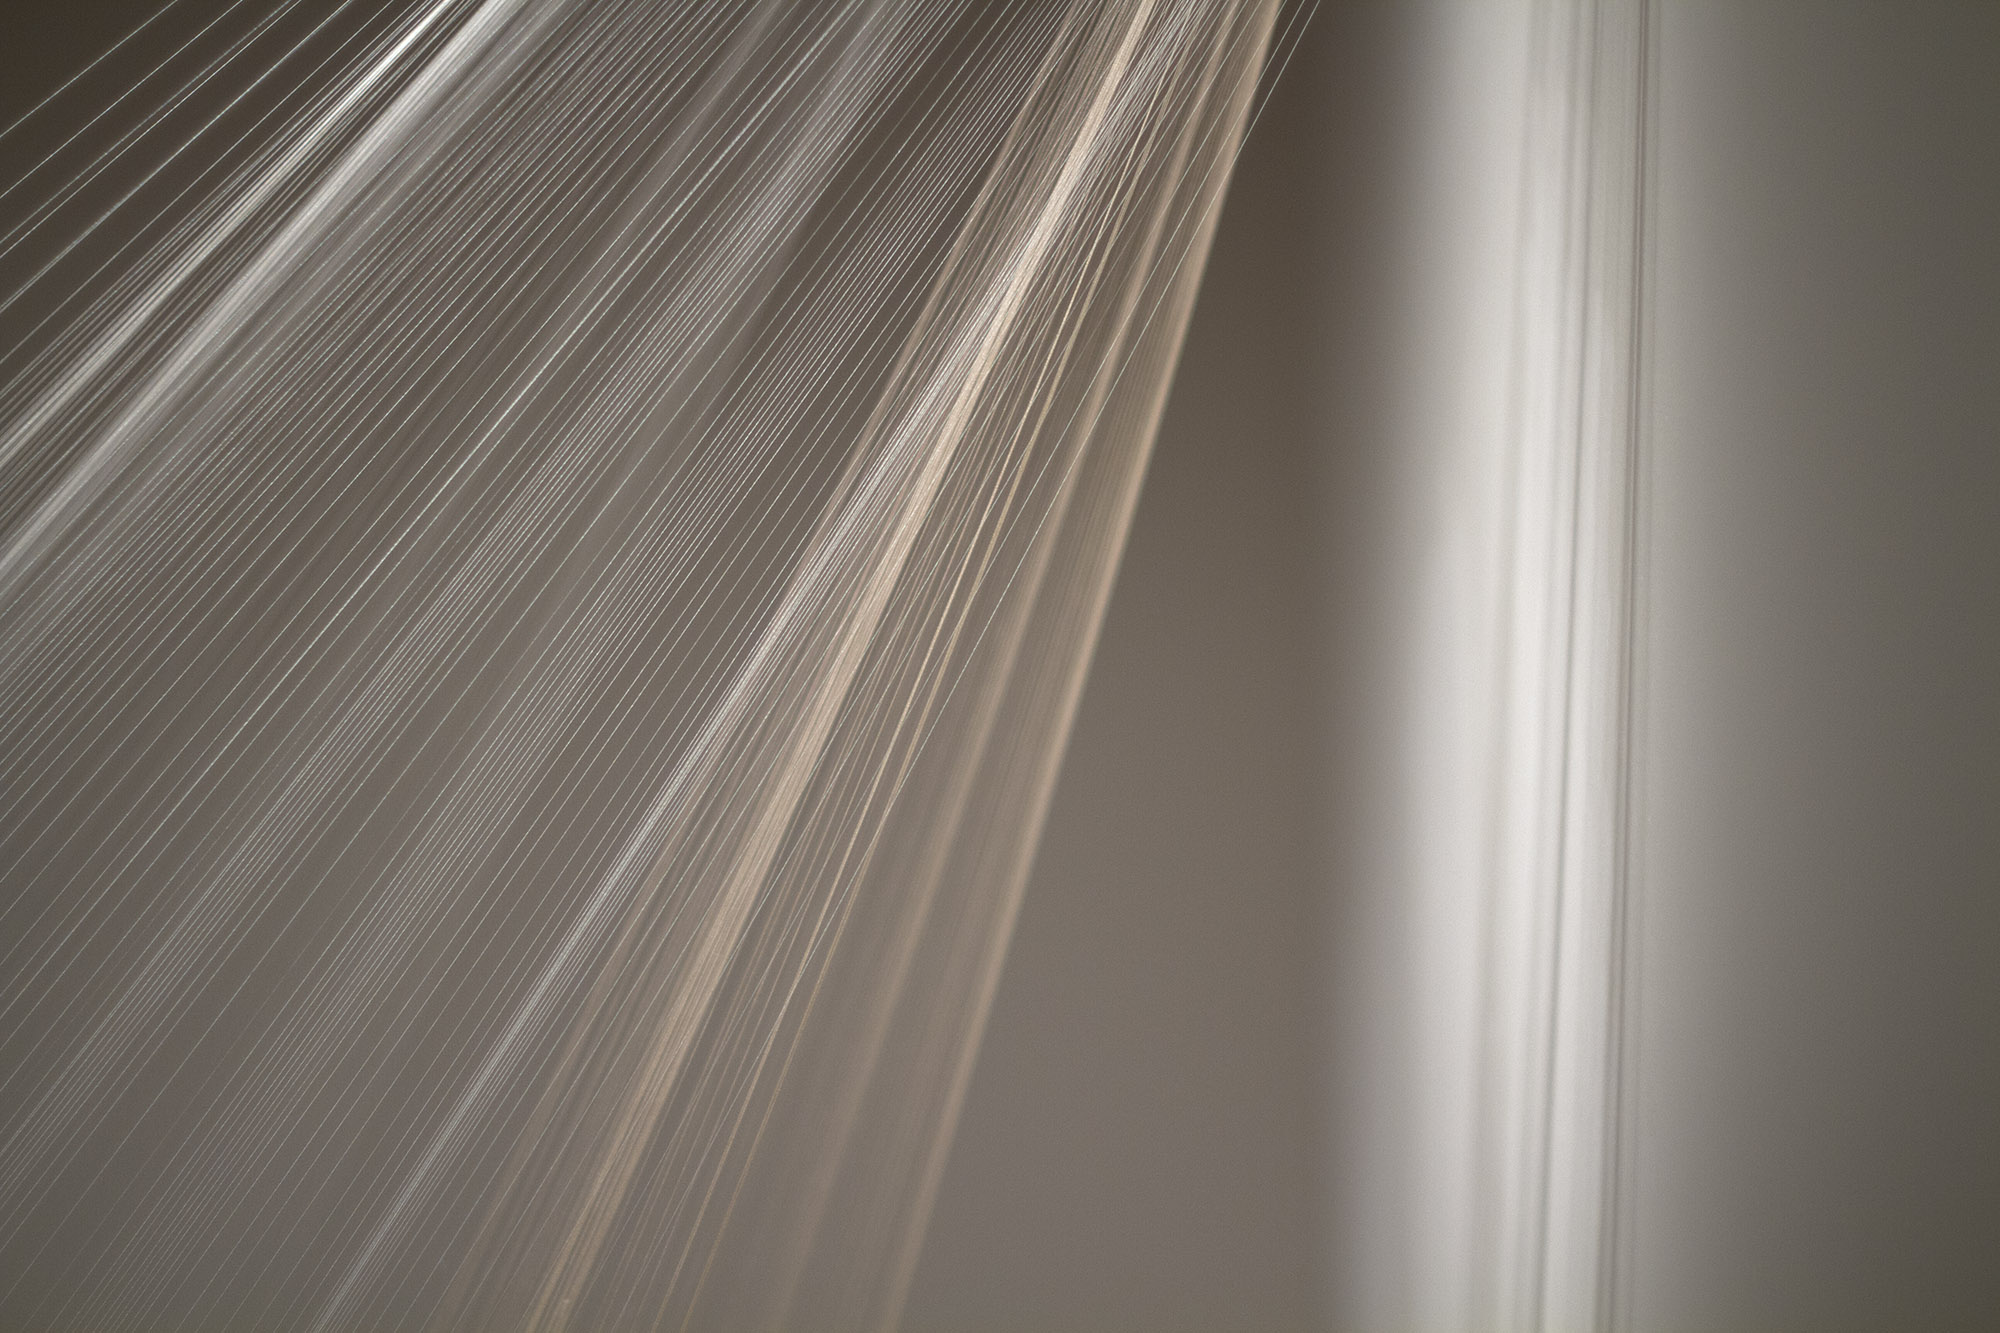    conditional presences  , 2013 (detail) silk string, glass microspheres, coal slag, light 9 x 13.5 x 16 ft. image credit |&nbsp; Ian Clark    Disjecta , Portland OR 